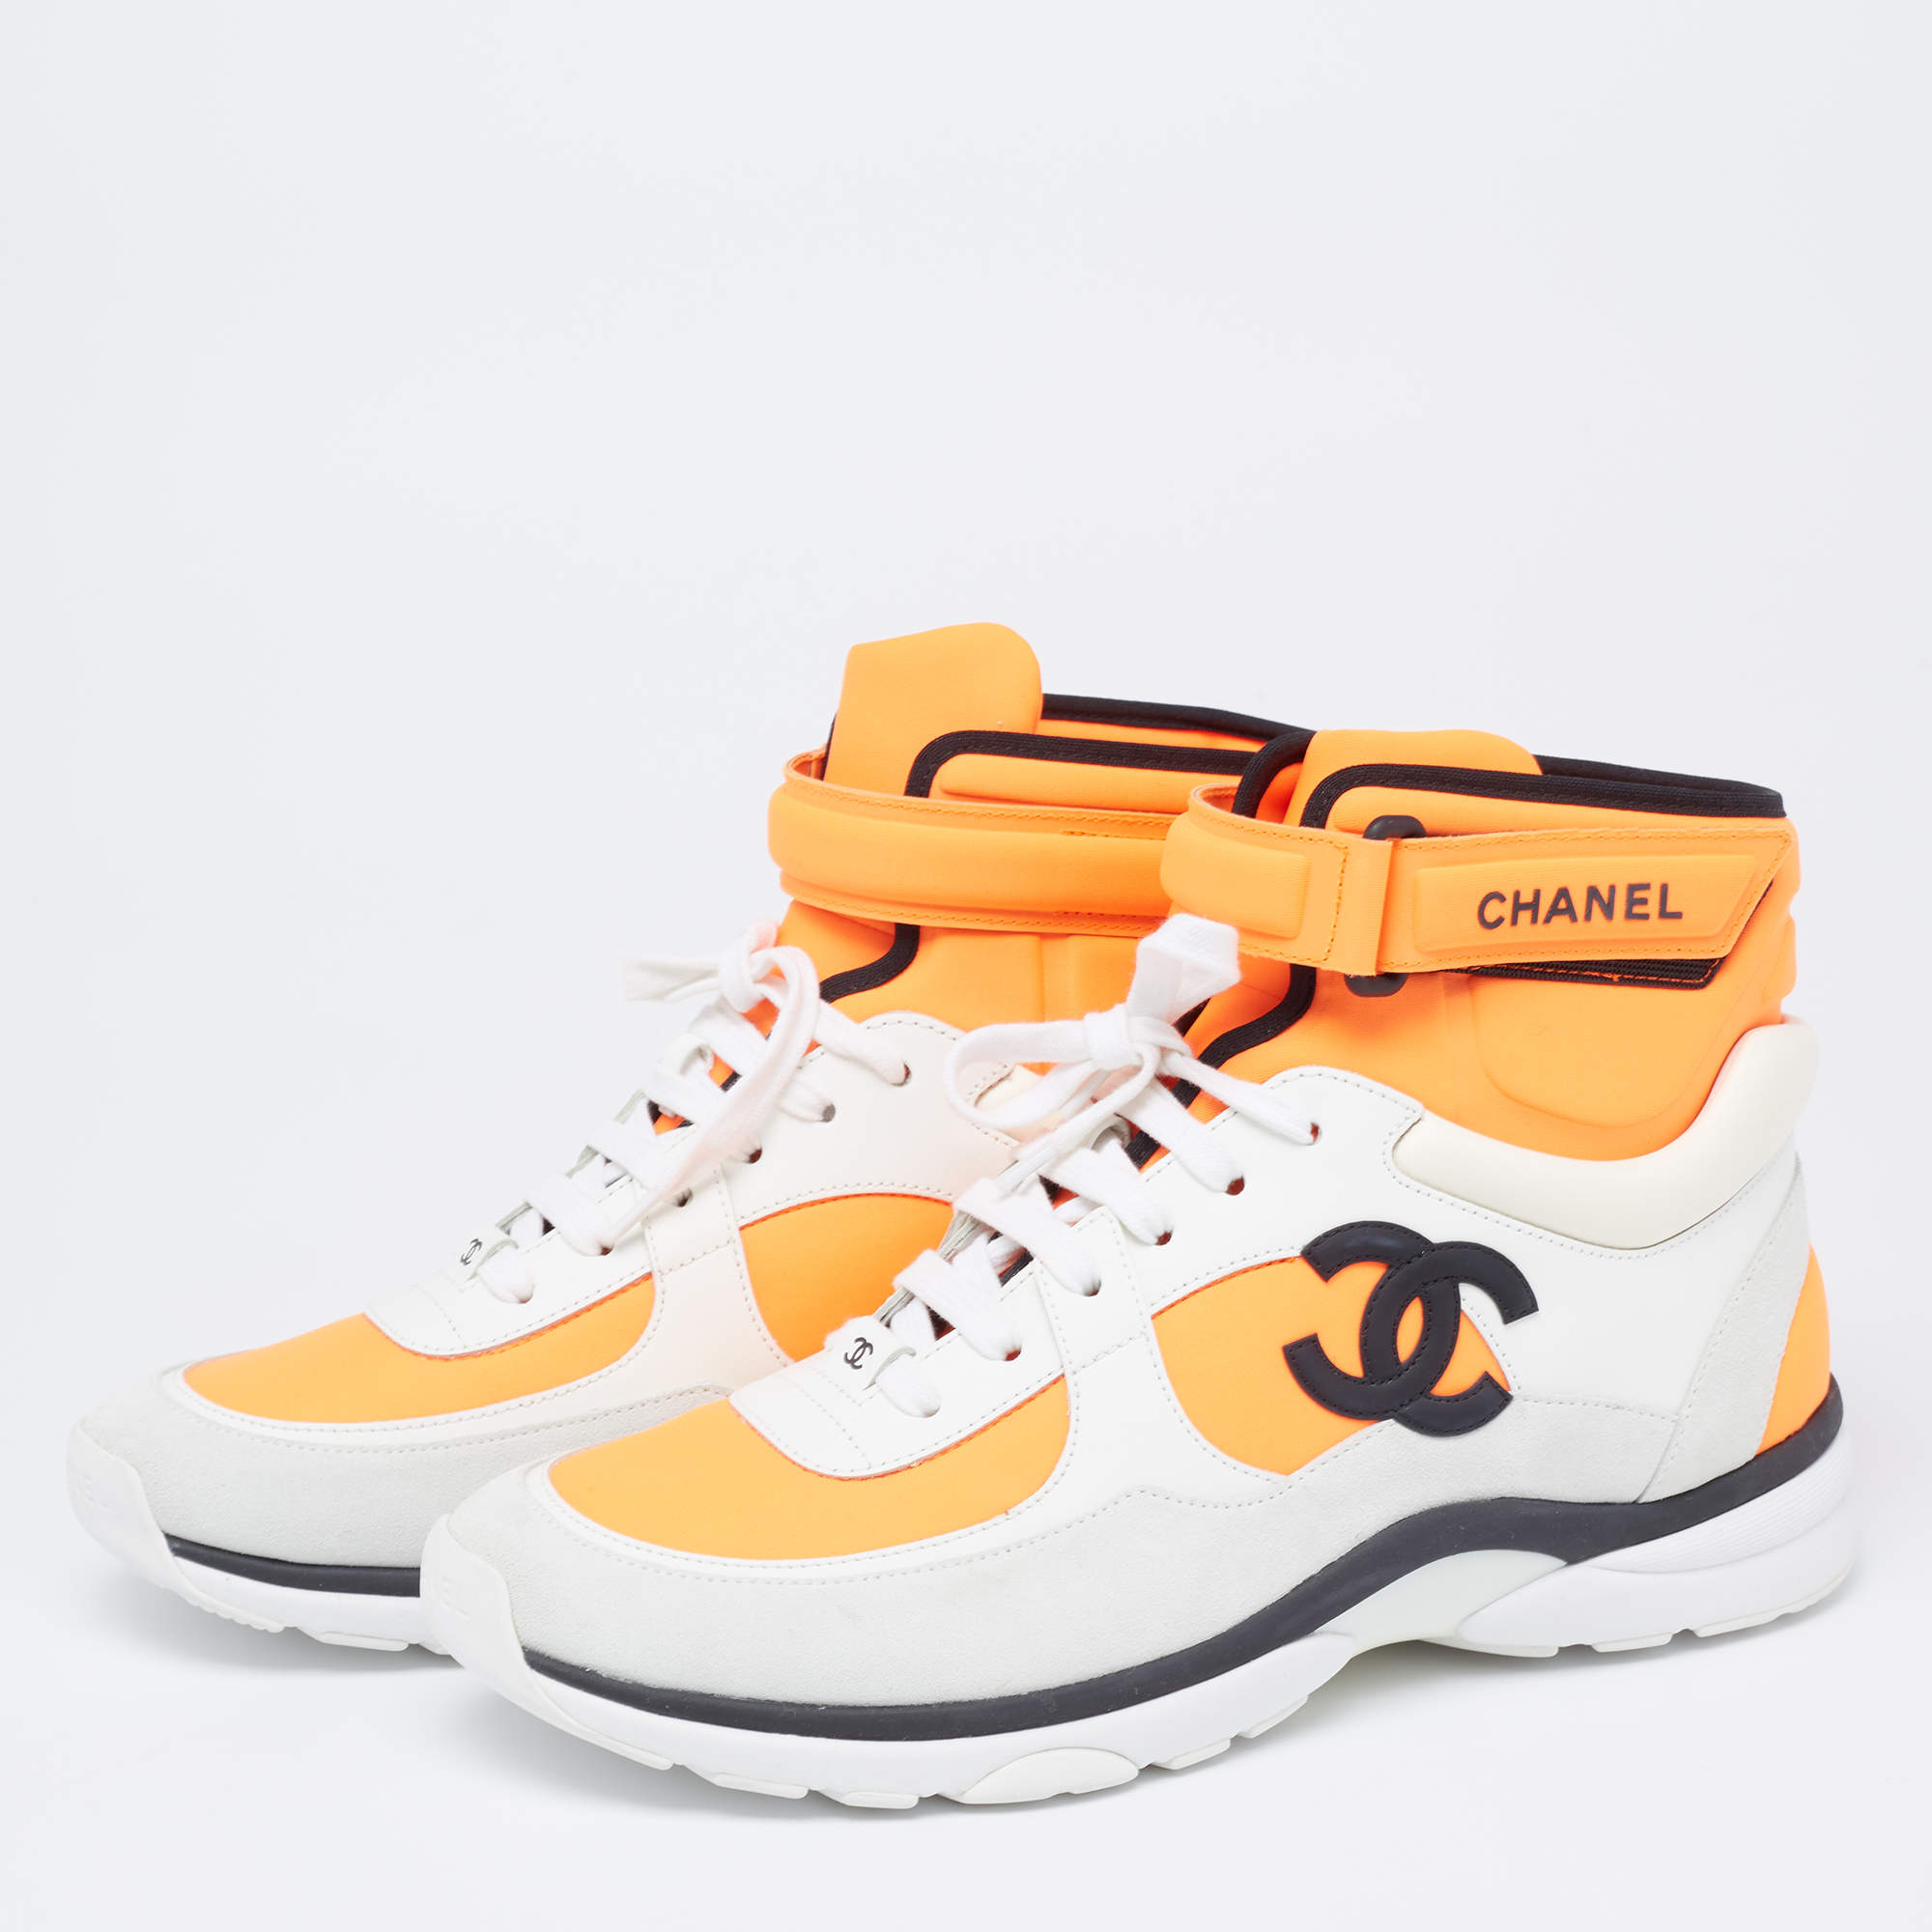 Chanel Shoes Orange La France SAVE 33  pivphuketcom